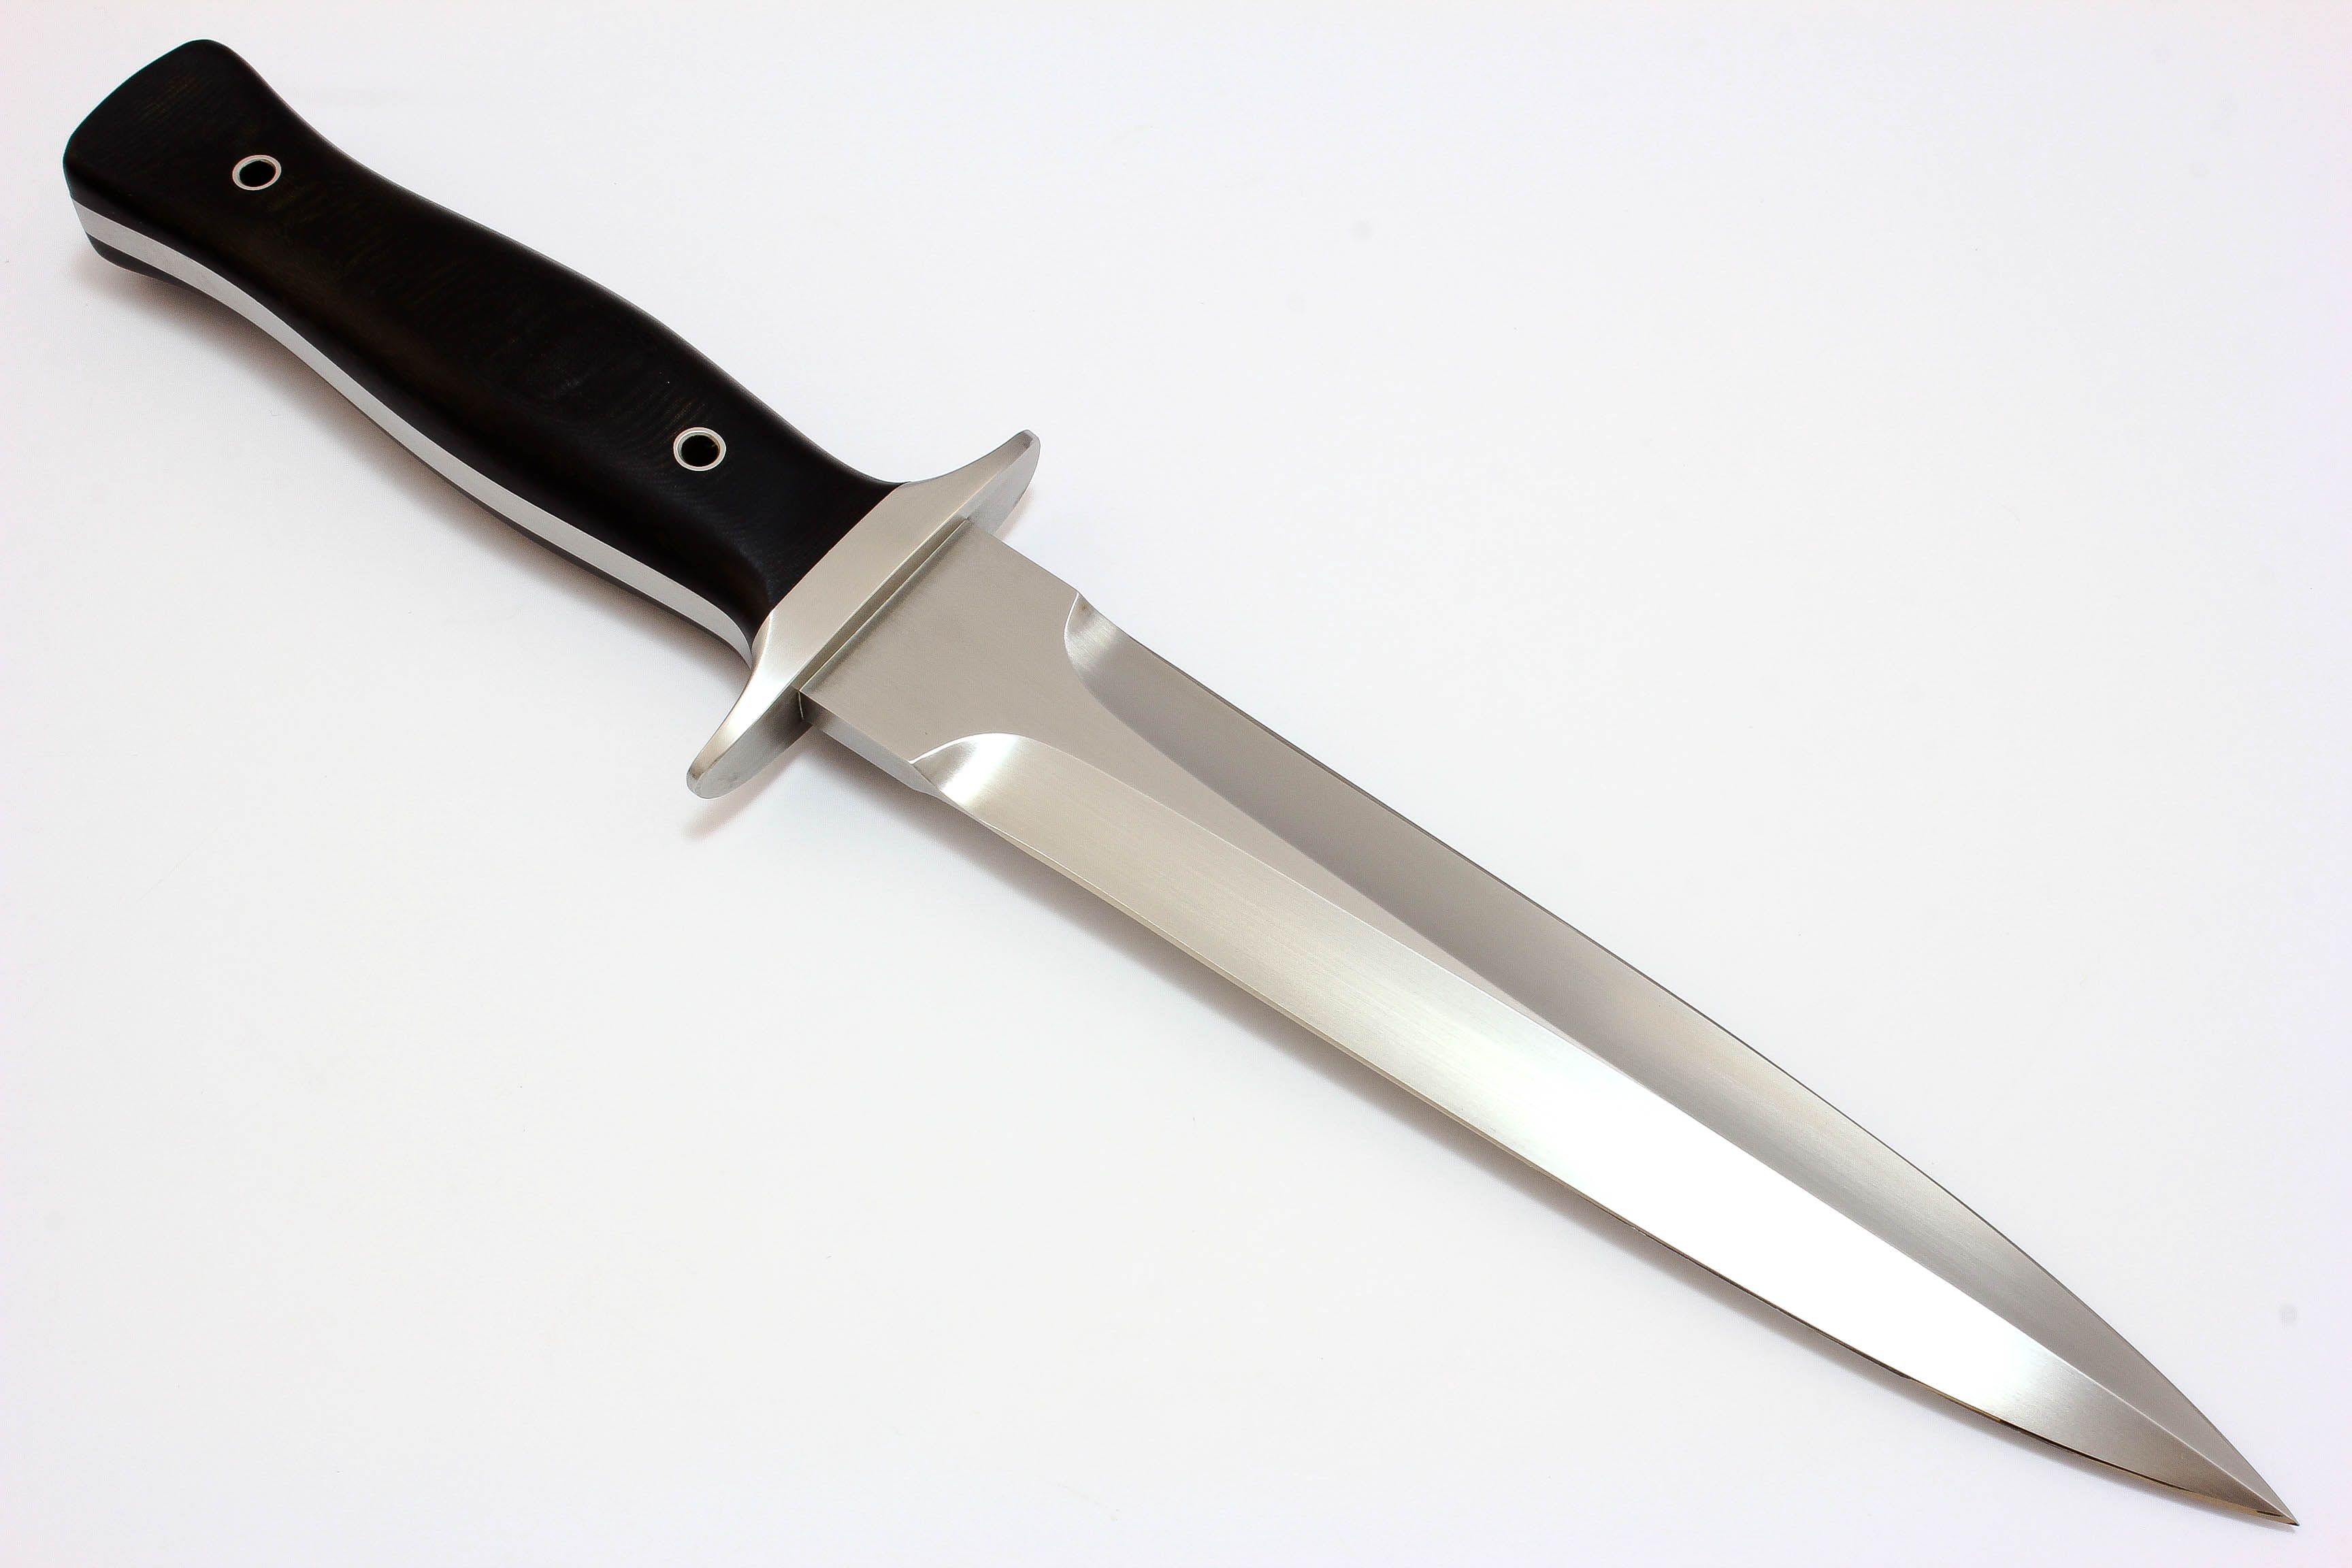 ARM - KNIFE CUSTOM U.S.A. - WALTER BREND | ARM | Pinterest | Knives ...